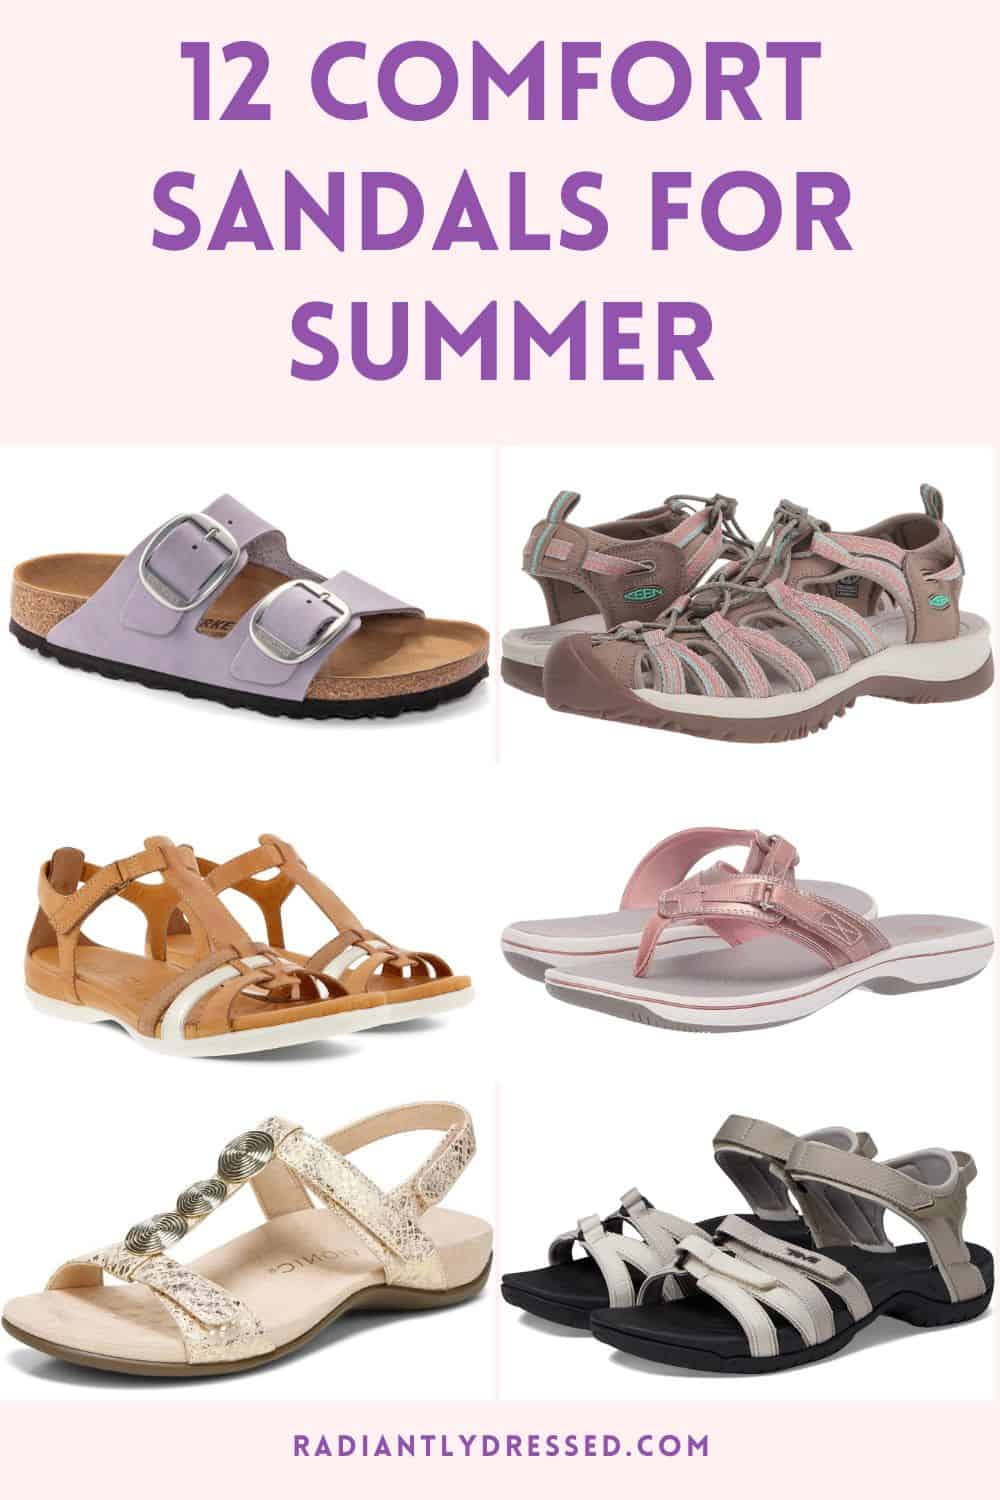 comfort sandals for summer for women over 40